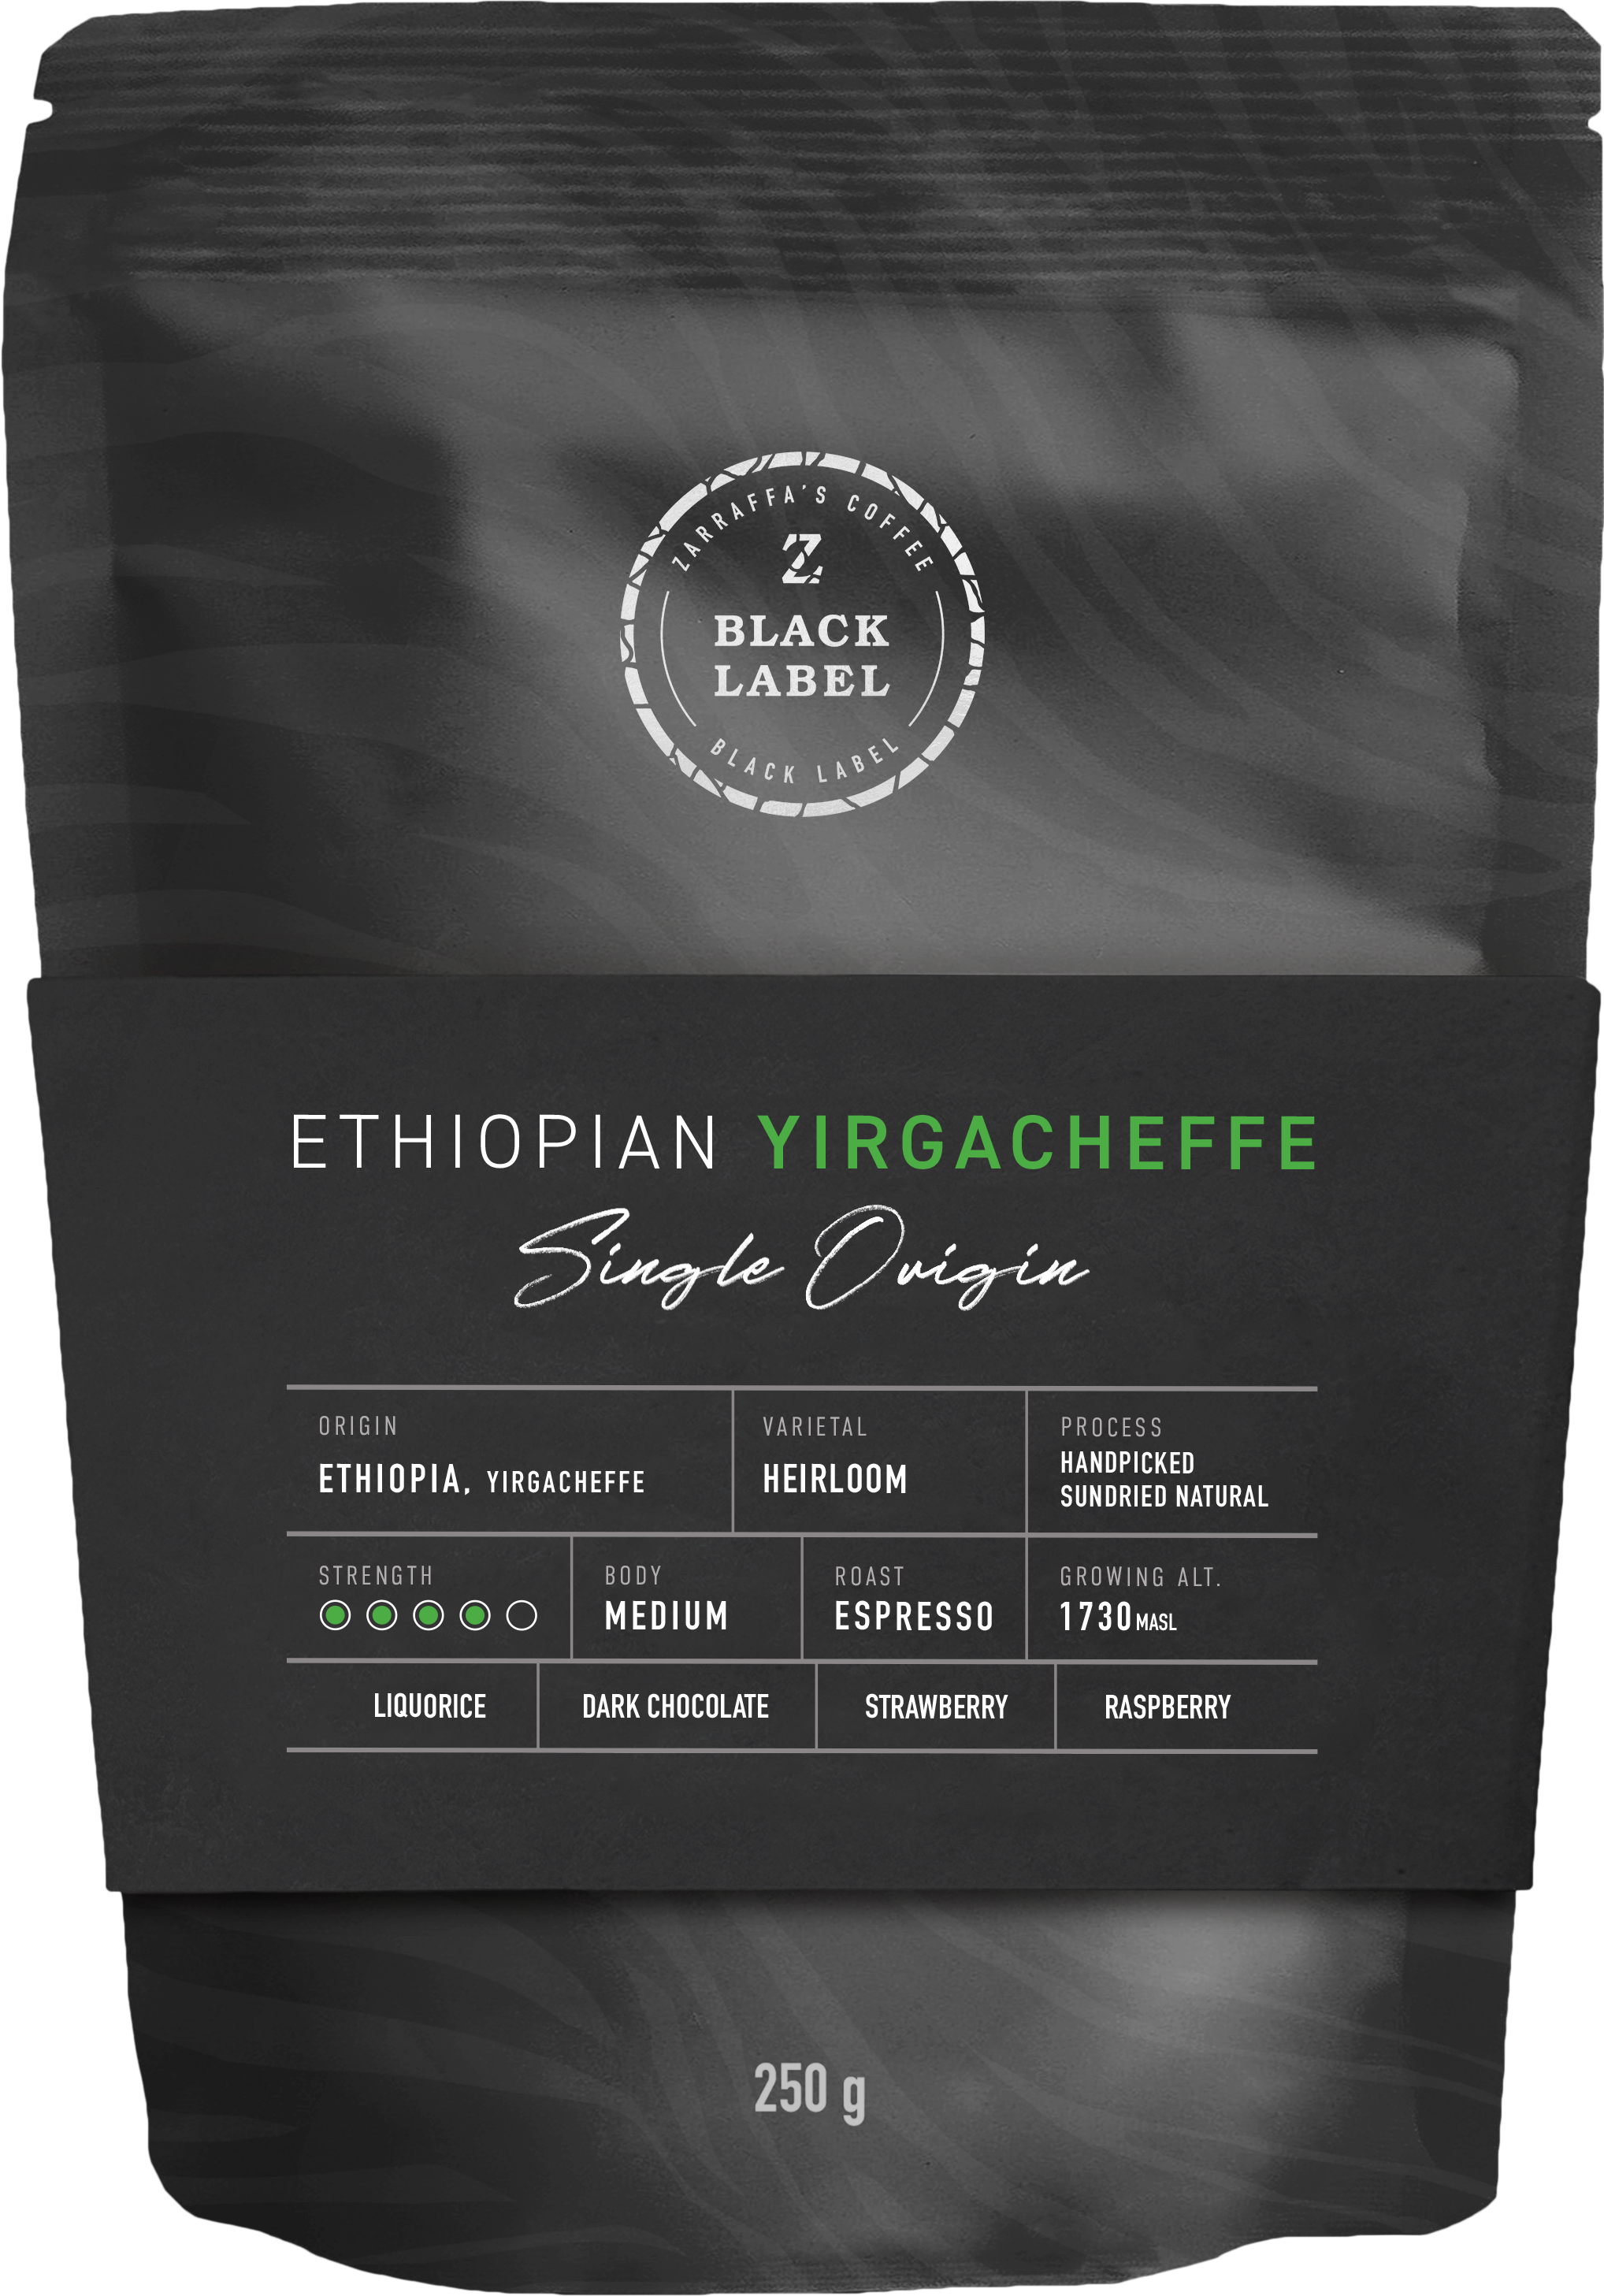 Ethiopian Yirgacheffe Single Origin coffee